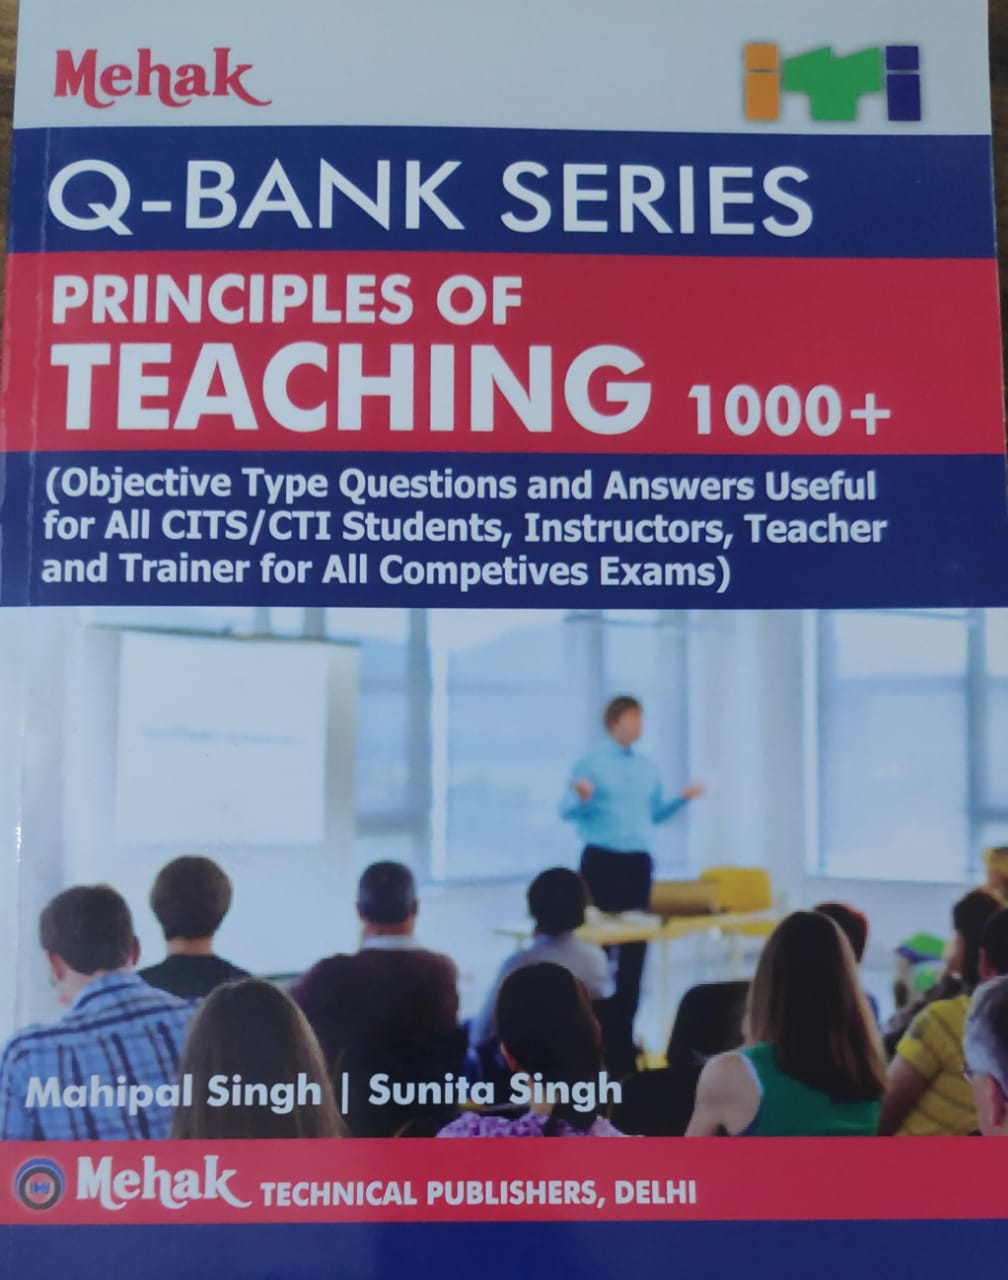 Q - BANK SERIES PRINCIPLES OF TEACHING 1000+